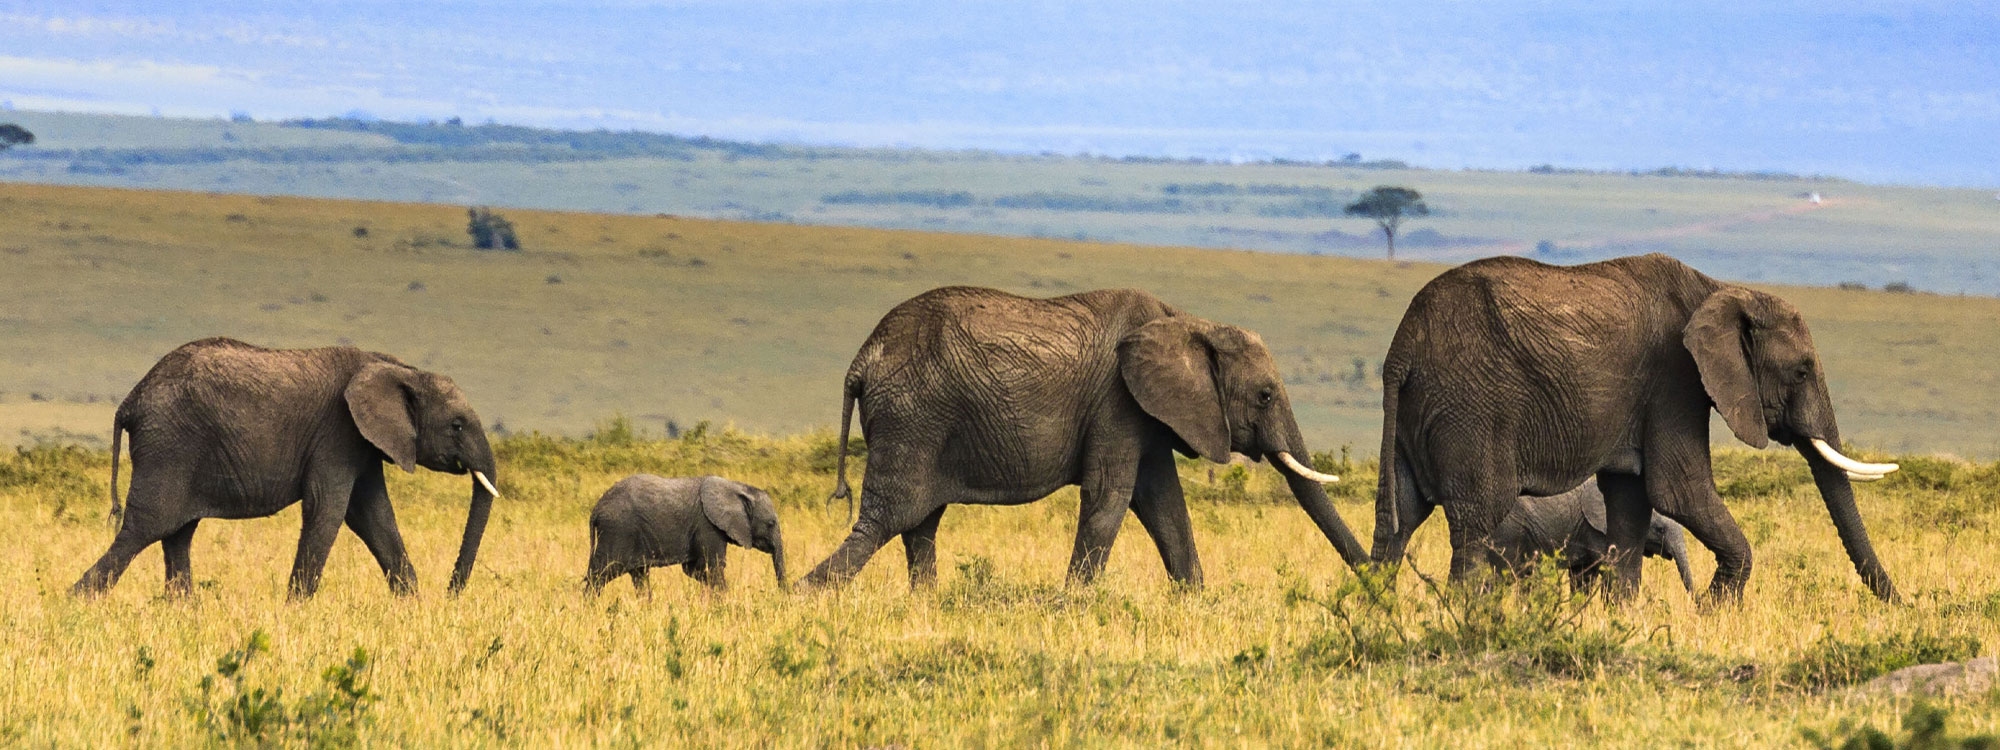 Five elephants on brown grass